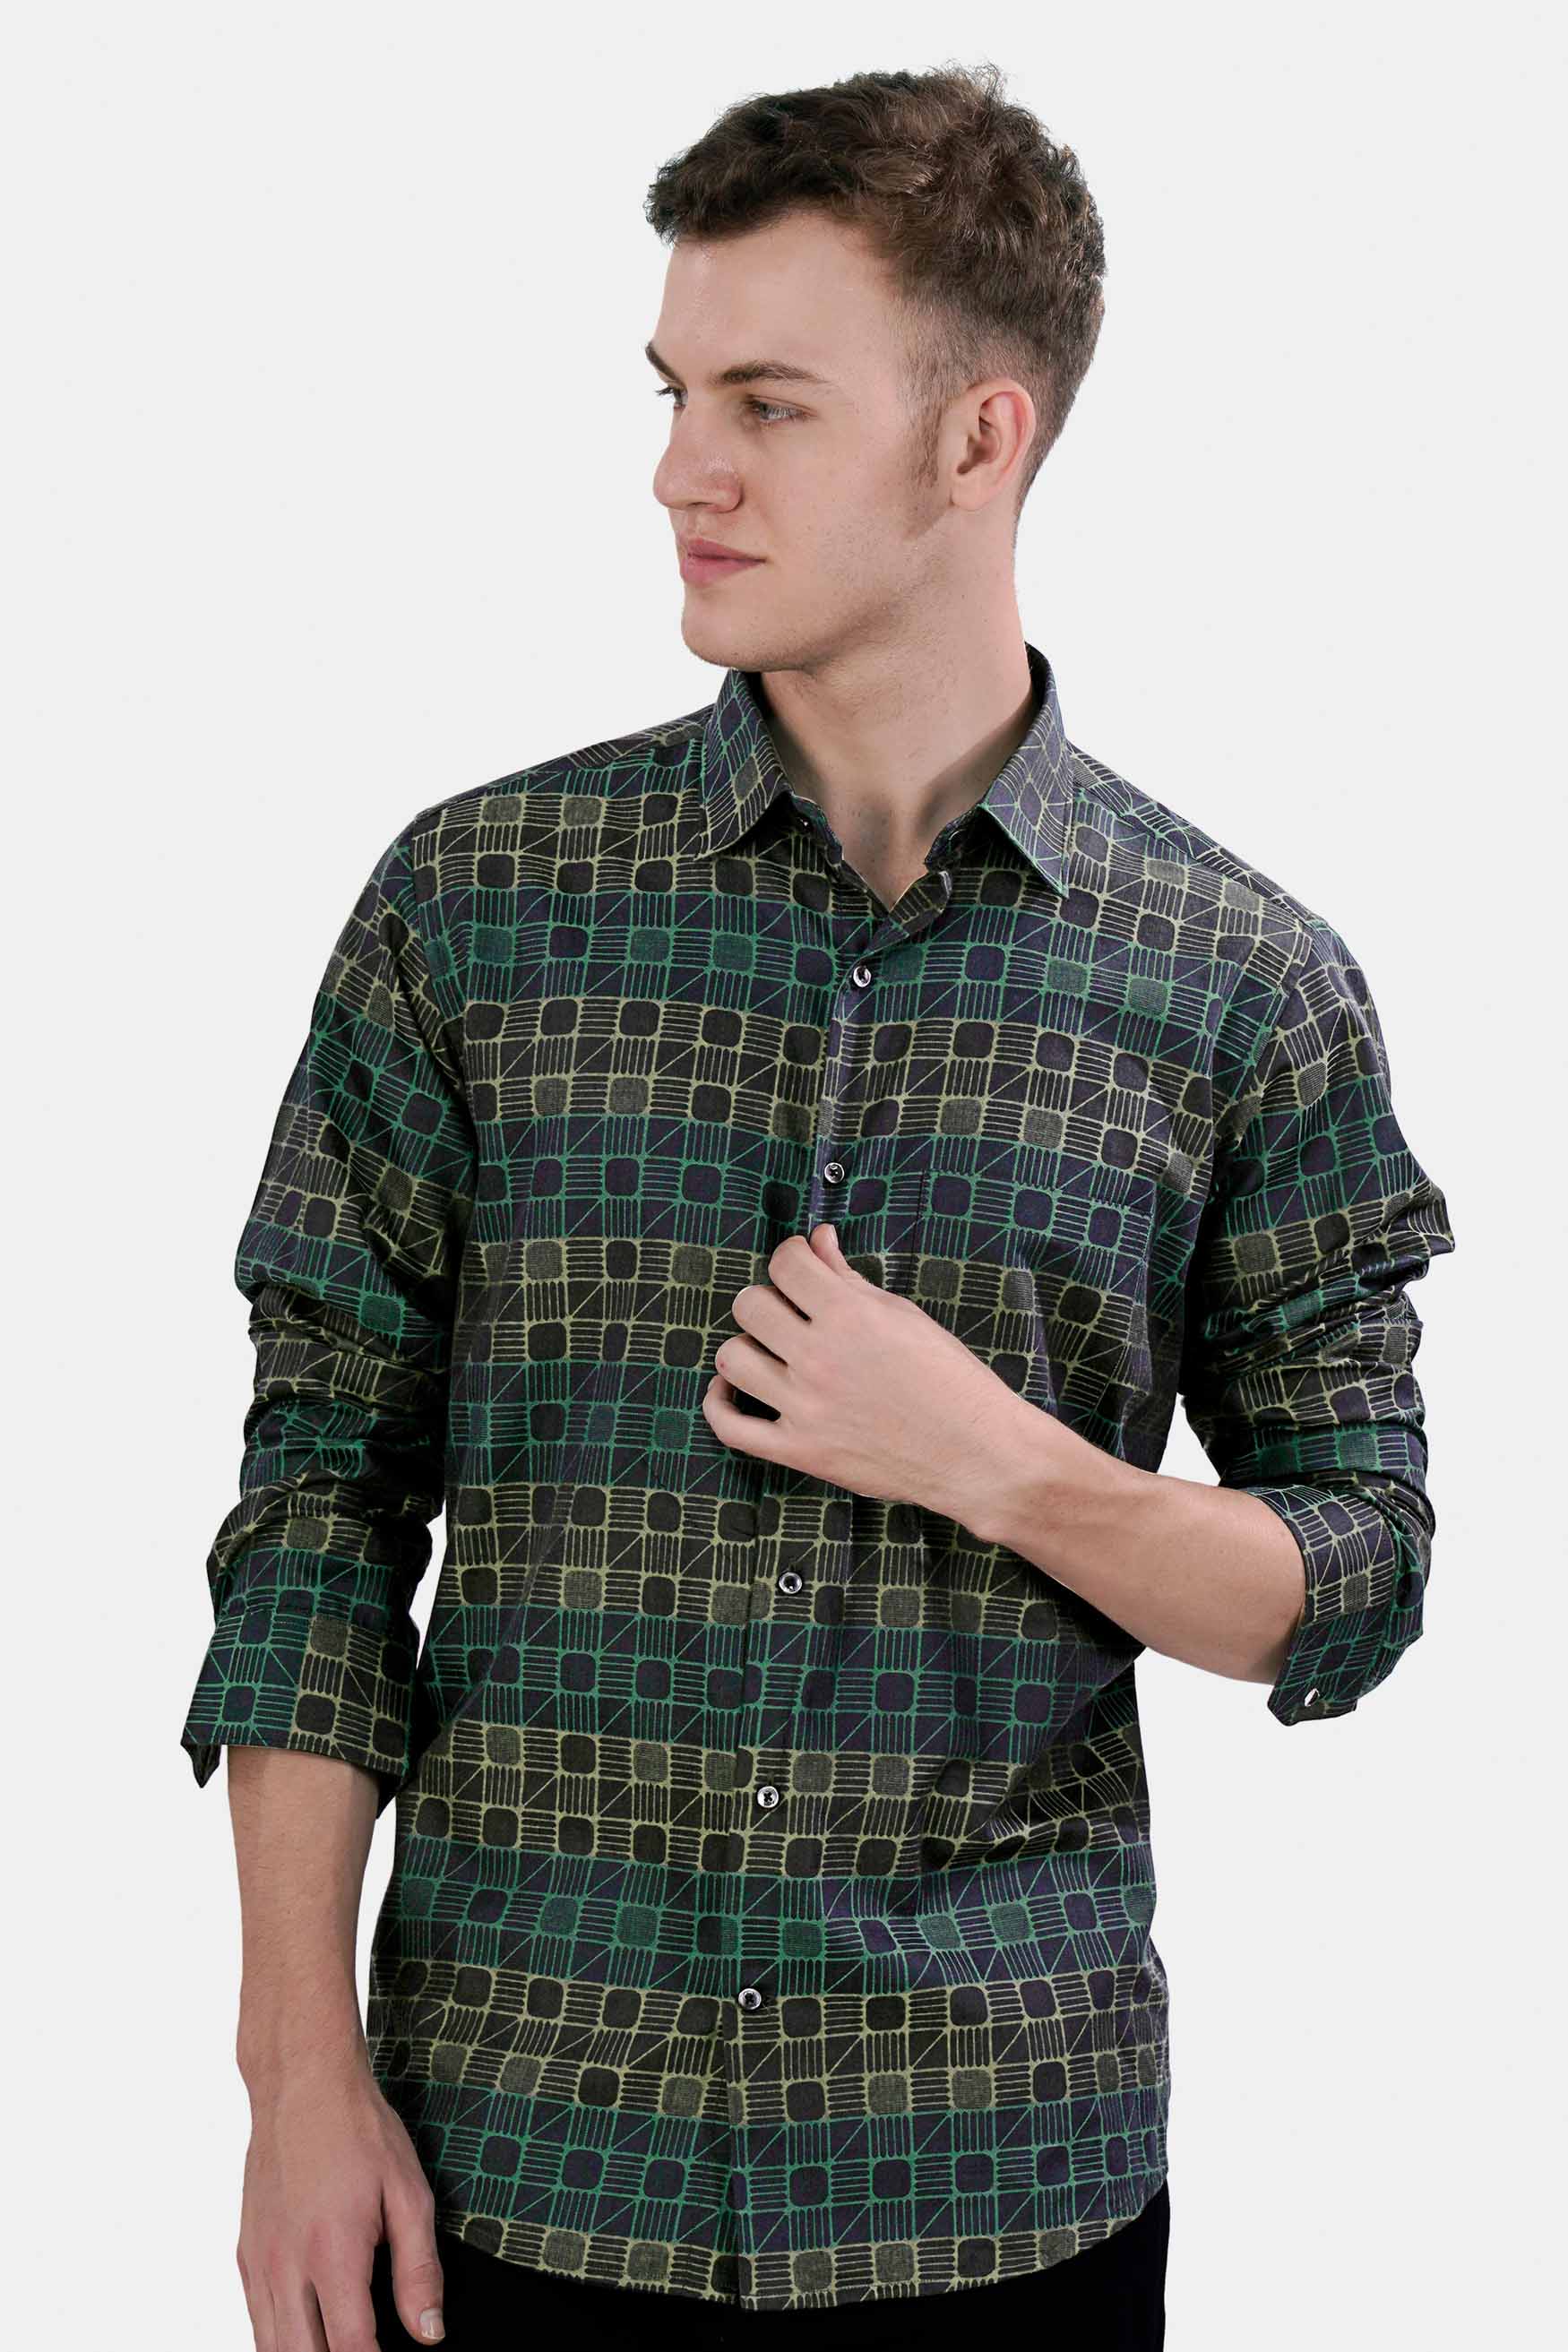 Tuatara Gray with Everglade Green Jacquard Textured Premium Giza Cotton Shirt